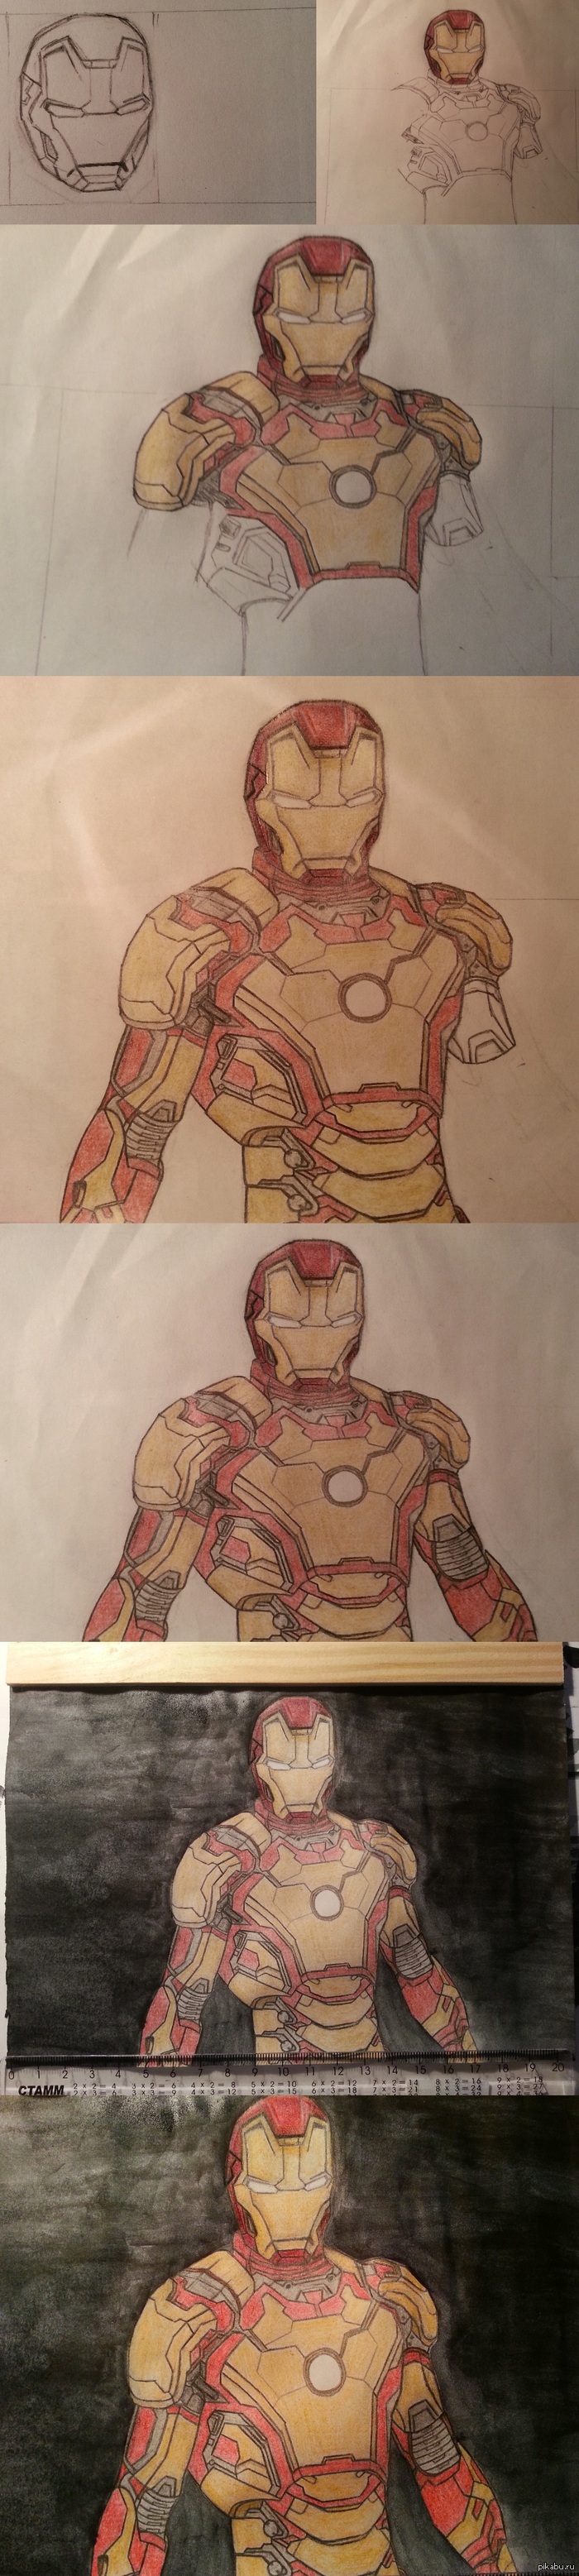 Iron man. Mark 42  by me) 